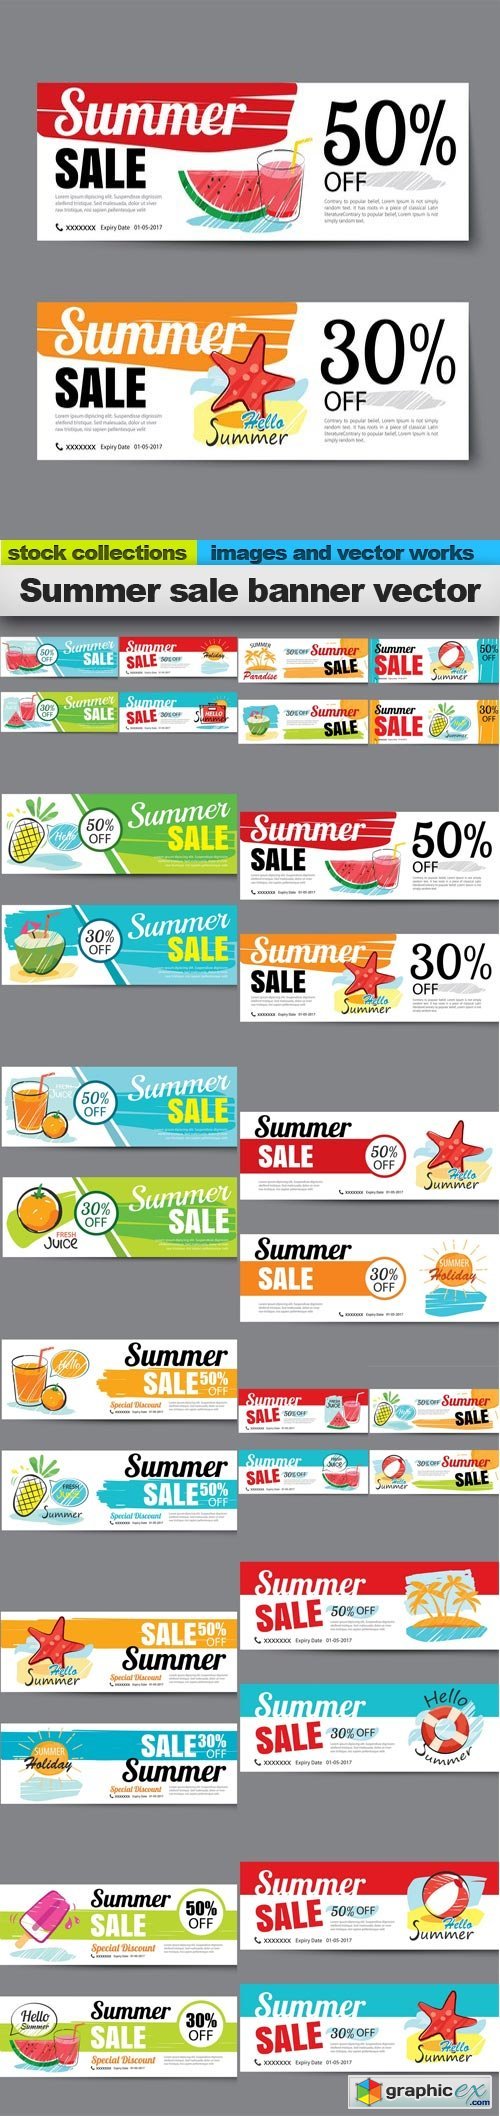 Summer sale banner vector, 15 x EPS